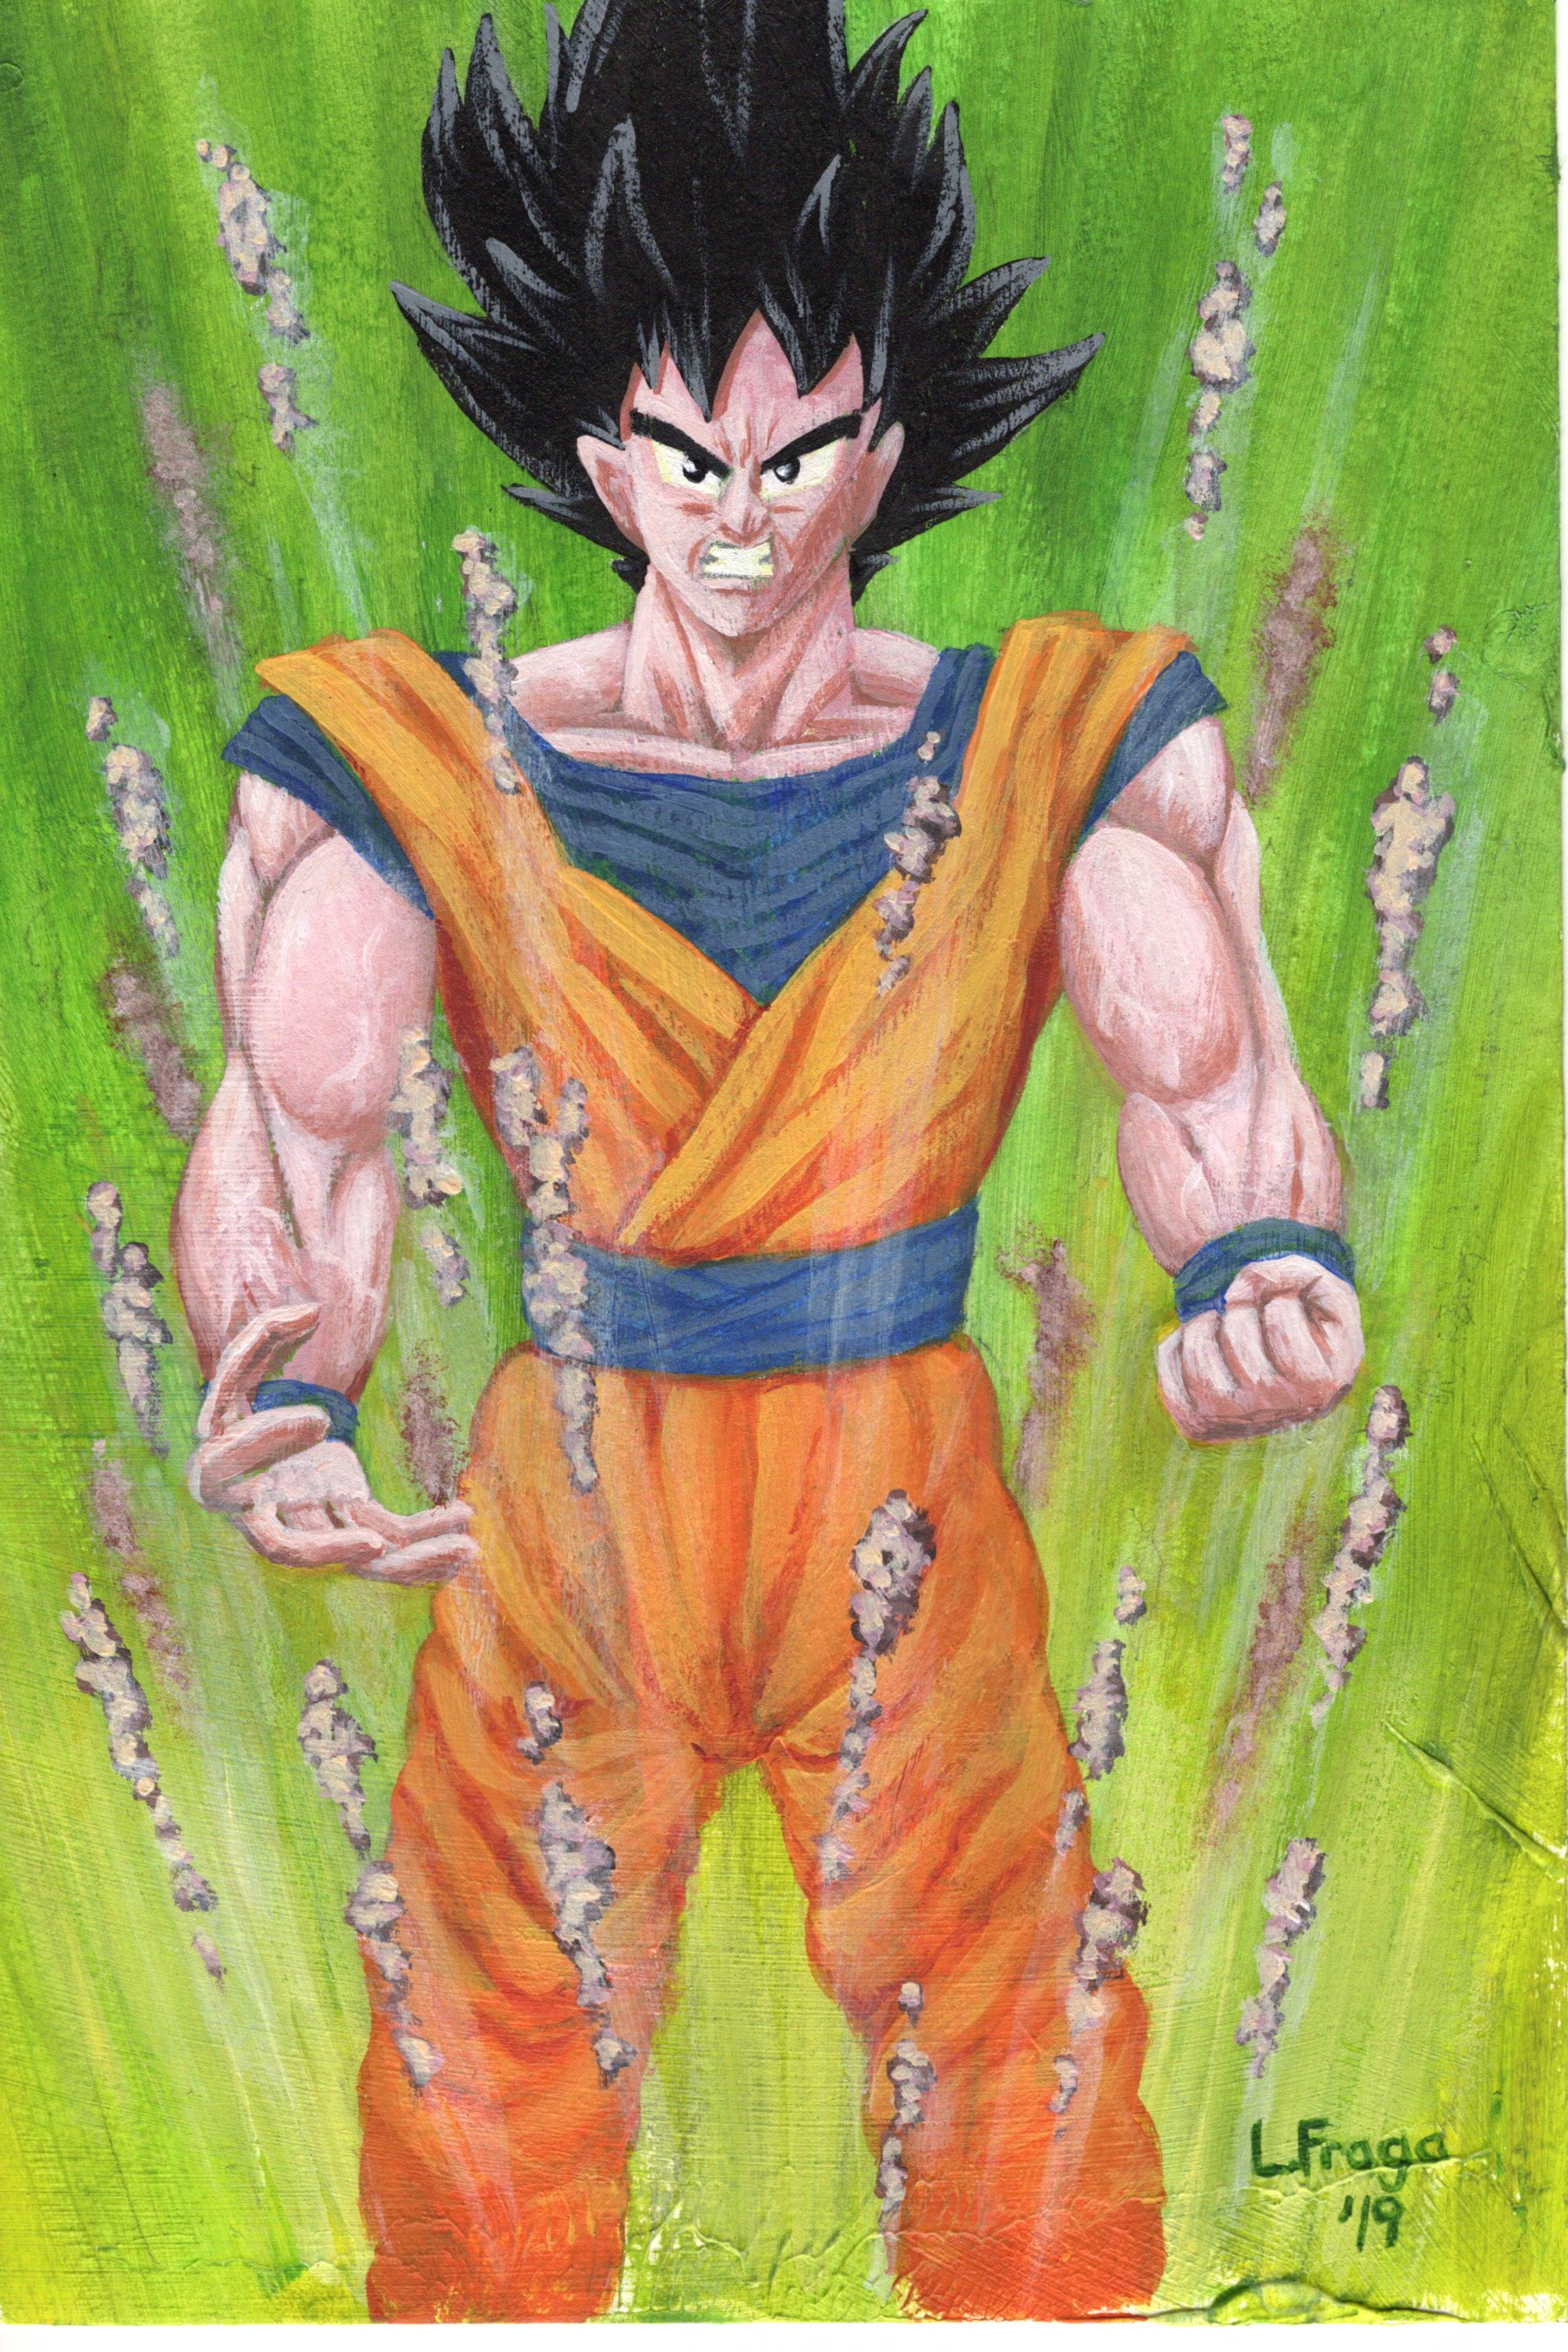 Artwork: Goku